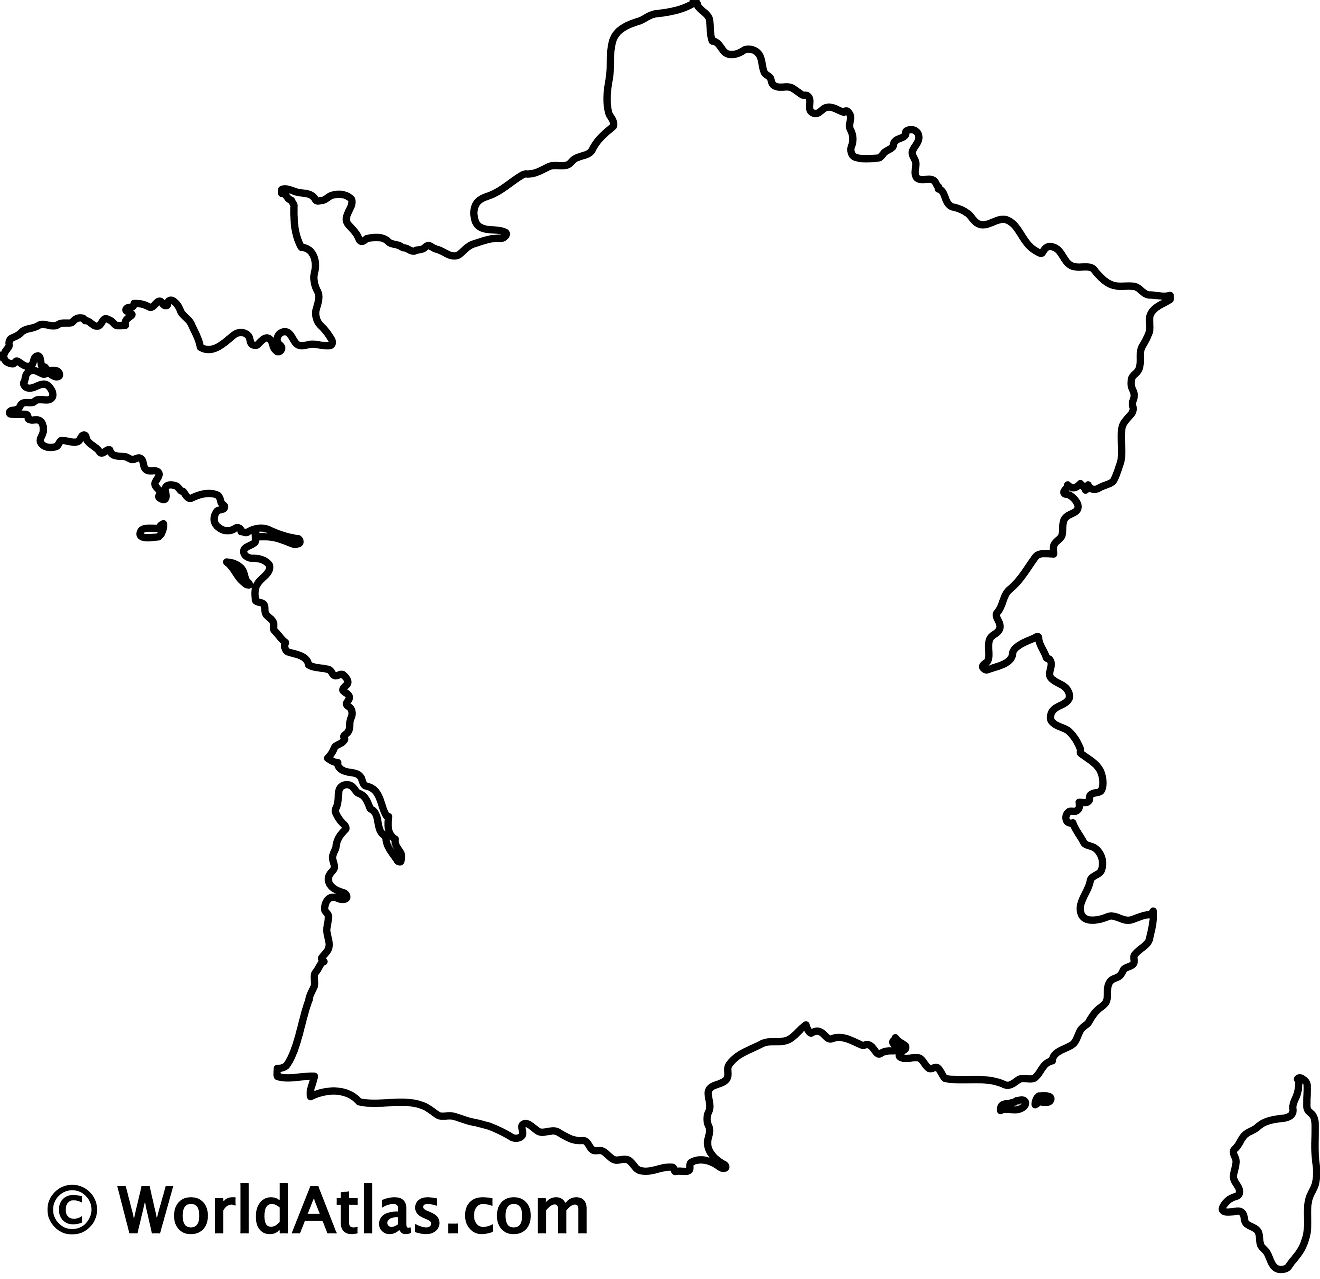 Outline Map Of France Paris France Maps & Facts - World Atlas